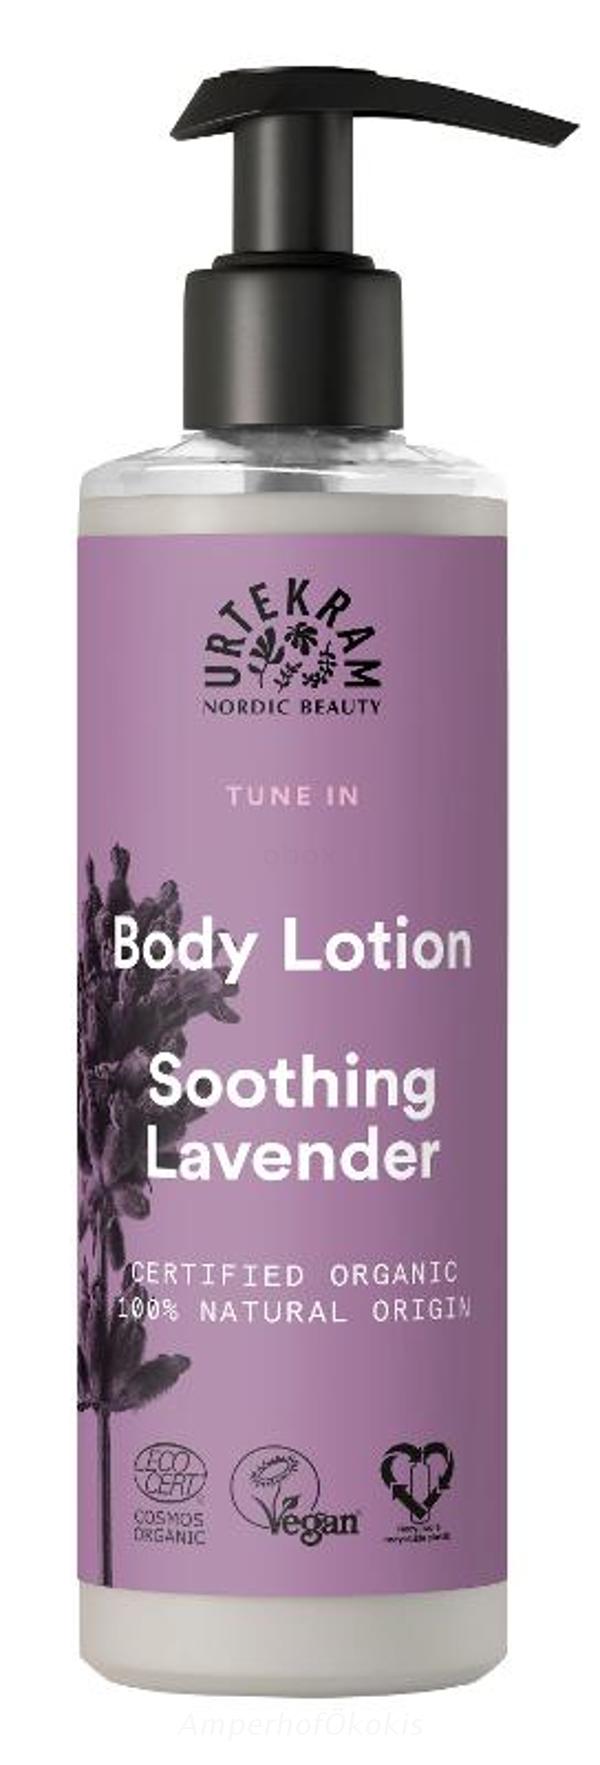 Produktfoto zu Body Lotion Soothing Lavender 245 ml